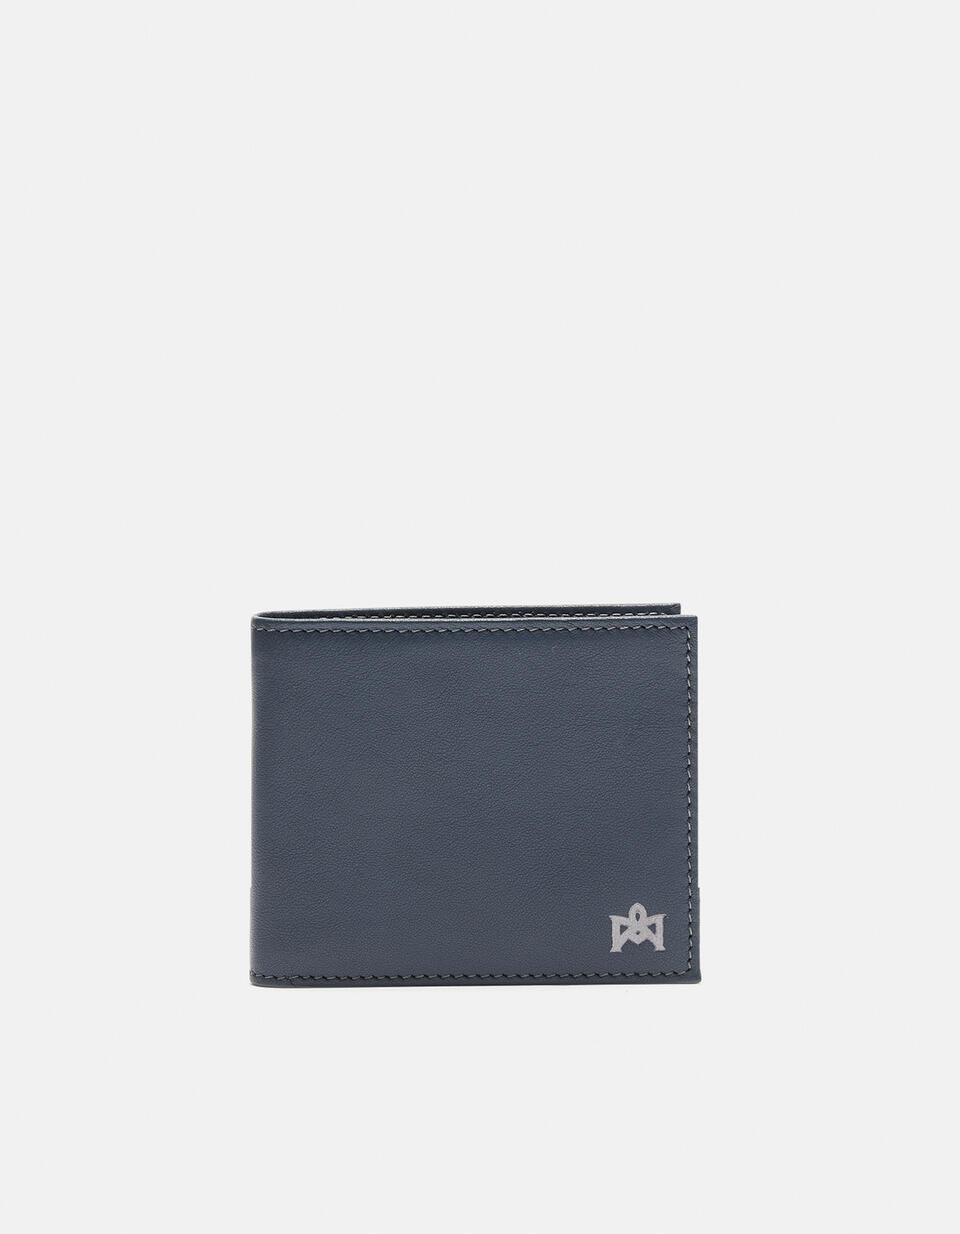 Adam  basic wallet - Women's Wallets - Men's Wallets | Wallets BLUTAUPE - Women's Wallets - Men's Wallets | WalletsCuoieria Fiorentina